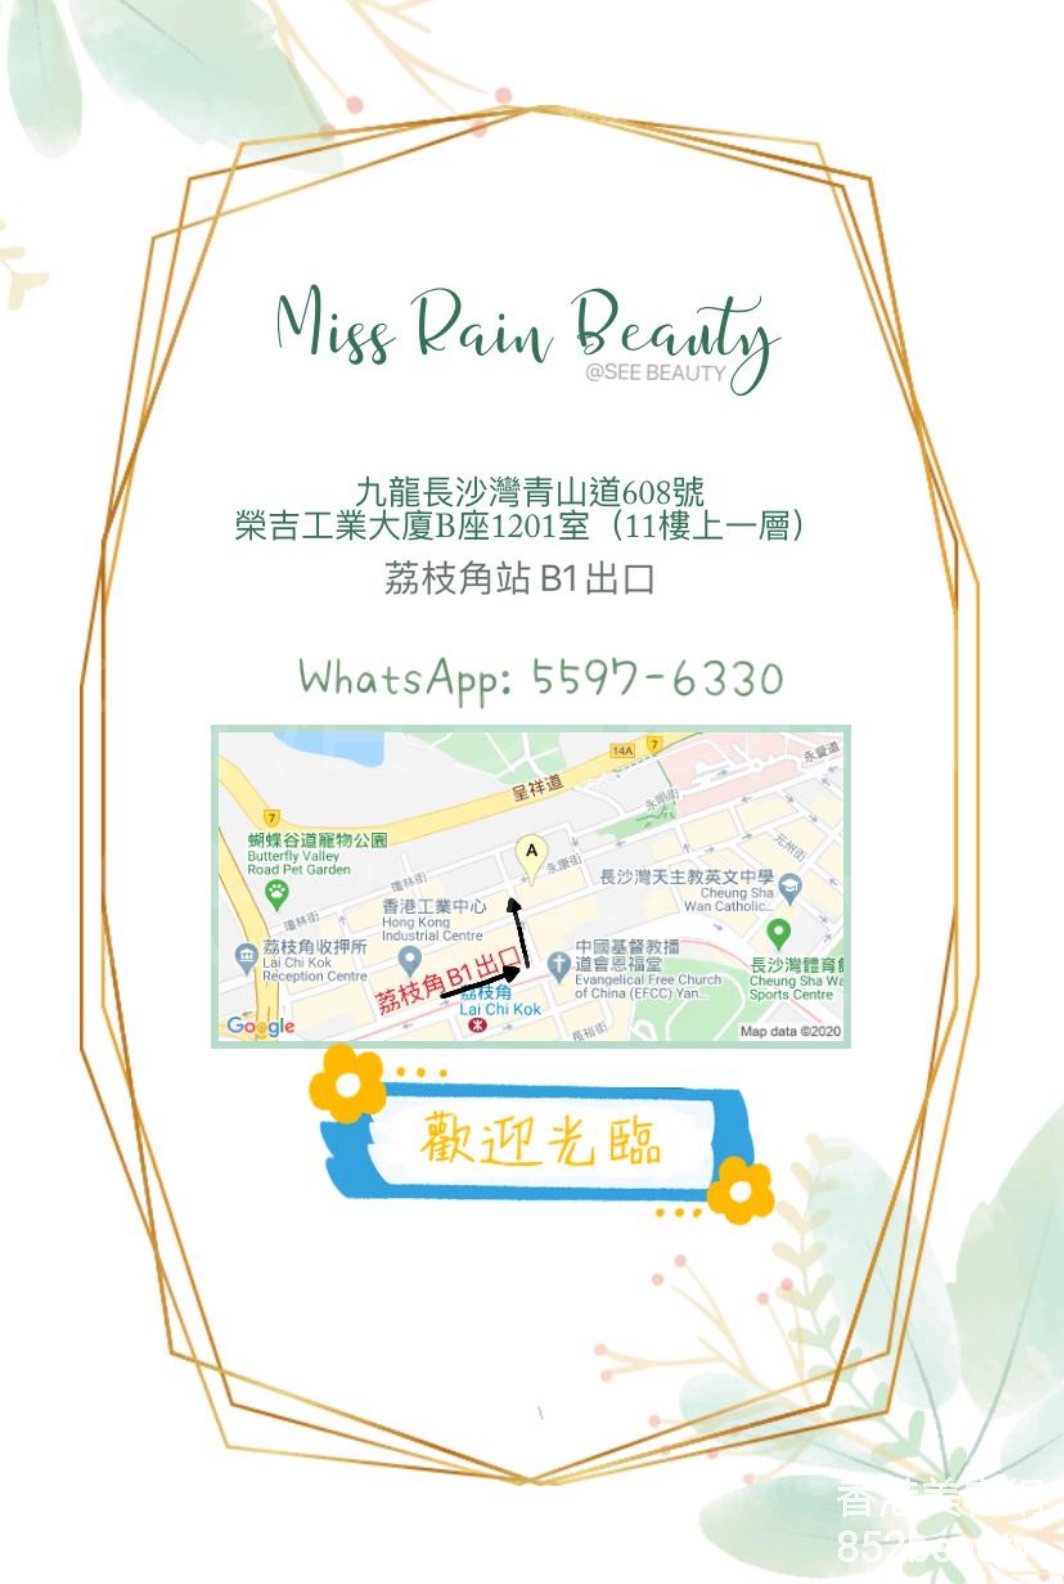 香港美容網 Hong Kong Beauty Salon 美容院 / 美容師: Miss Rain Beauty